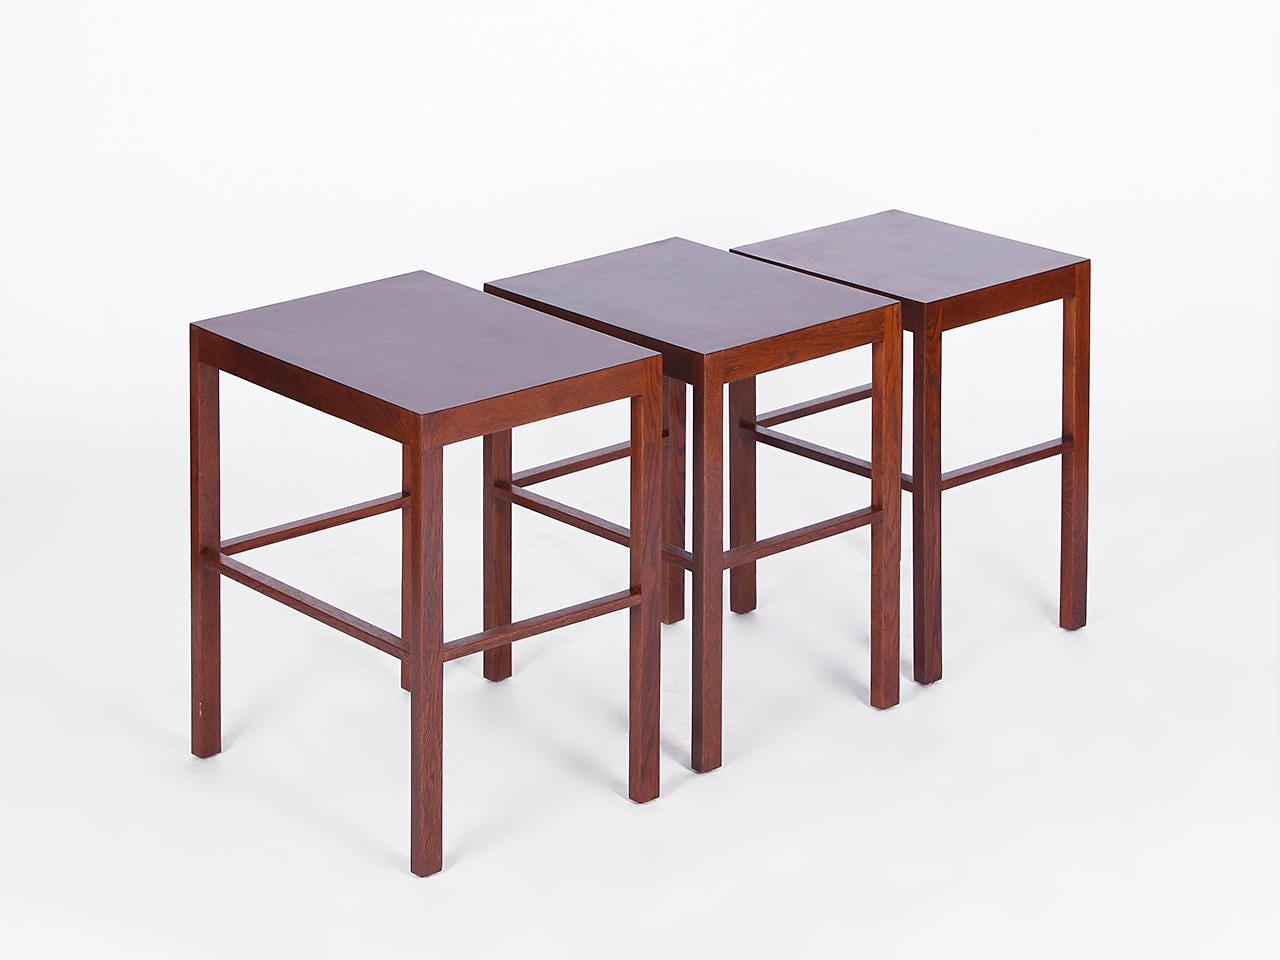 20th Century Set of Three Nesting Tables, Model No. 50, Designed by Jindrich Halabala